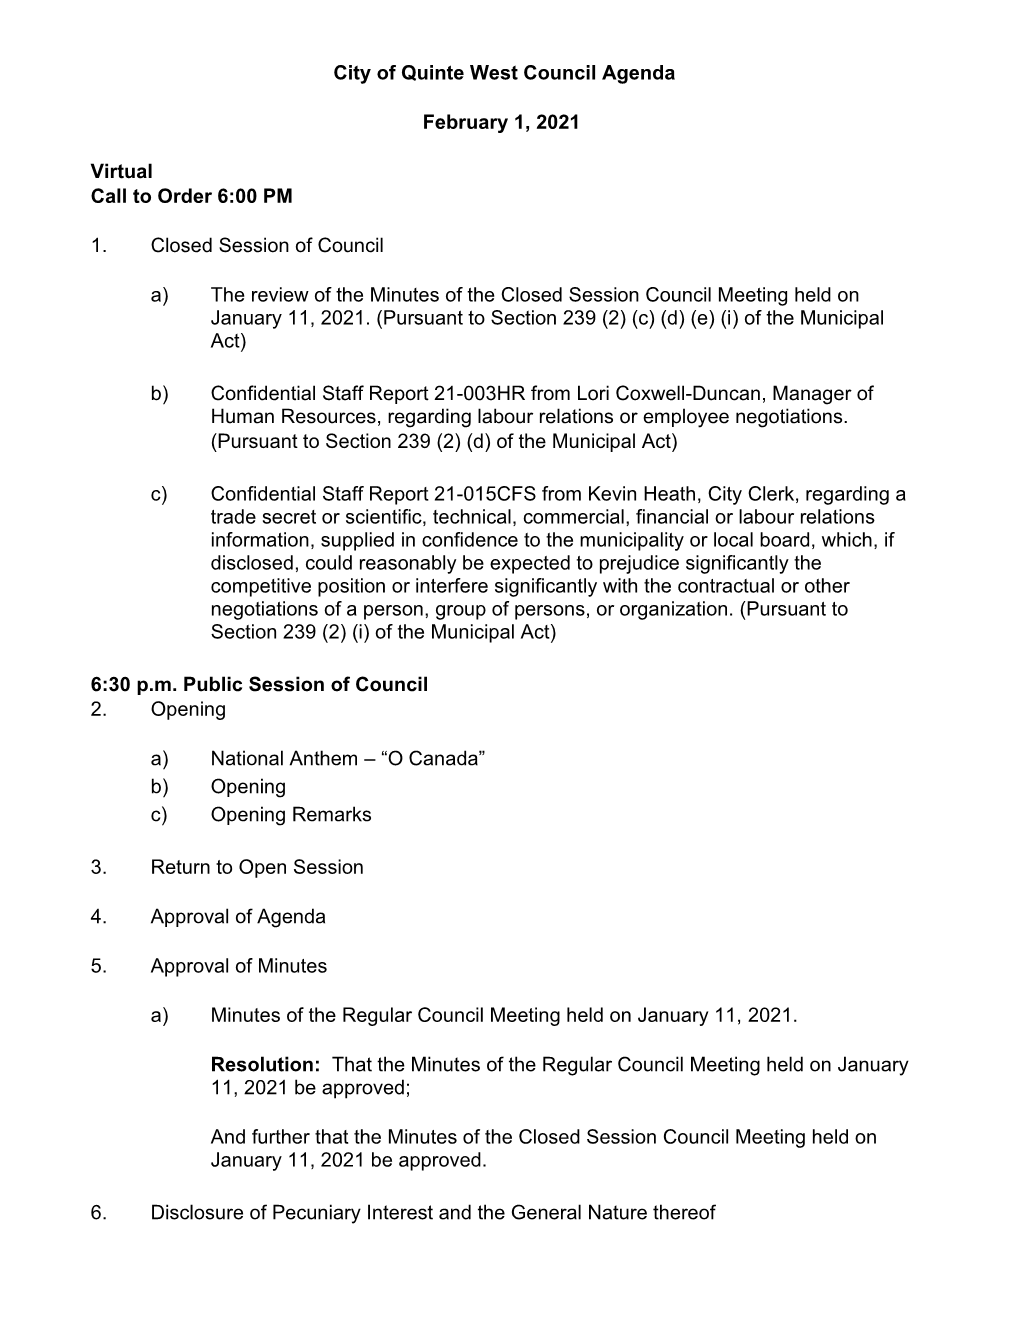 City of Quinte West Council Agenda February 1, 2021 Virtual Call To